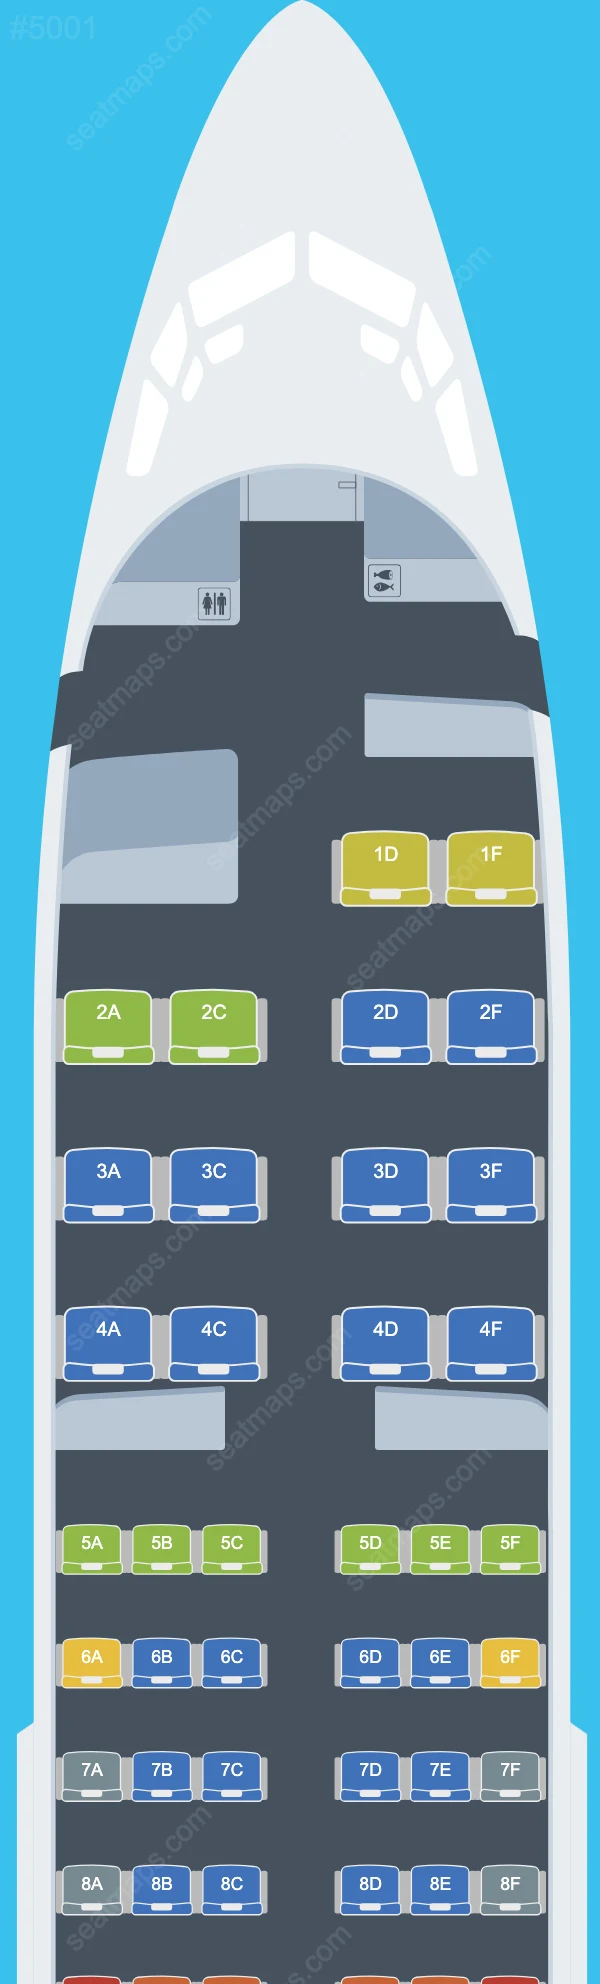 Tarom Boeing 737 Plan de Salle 737-700